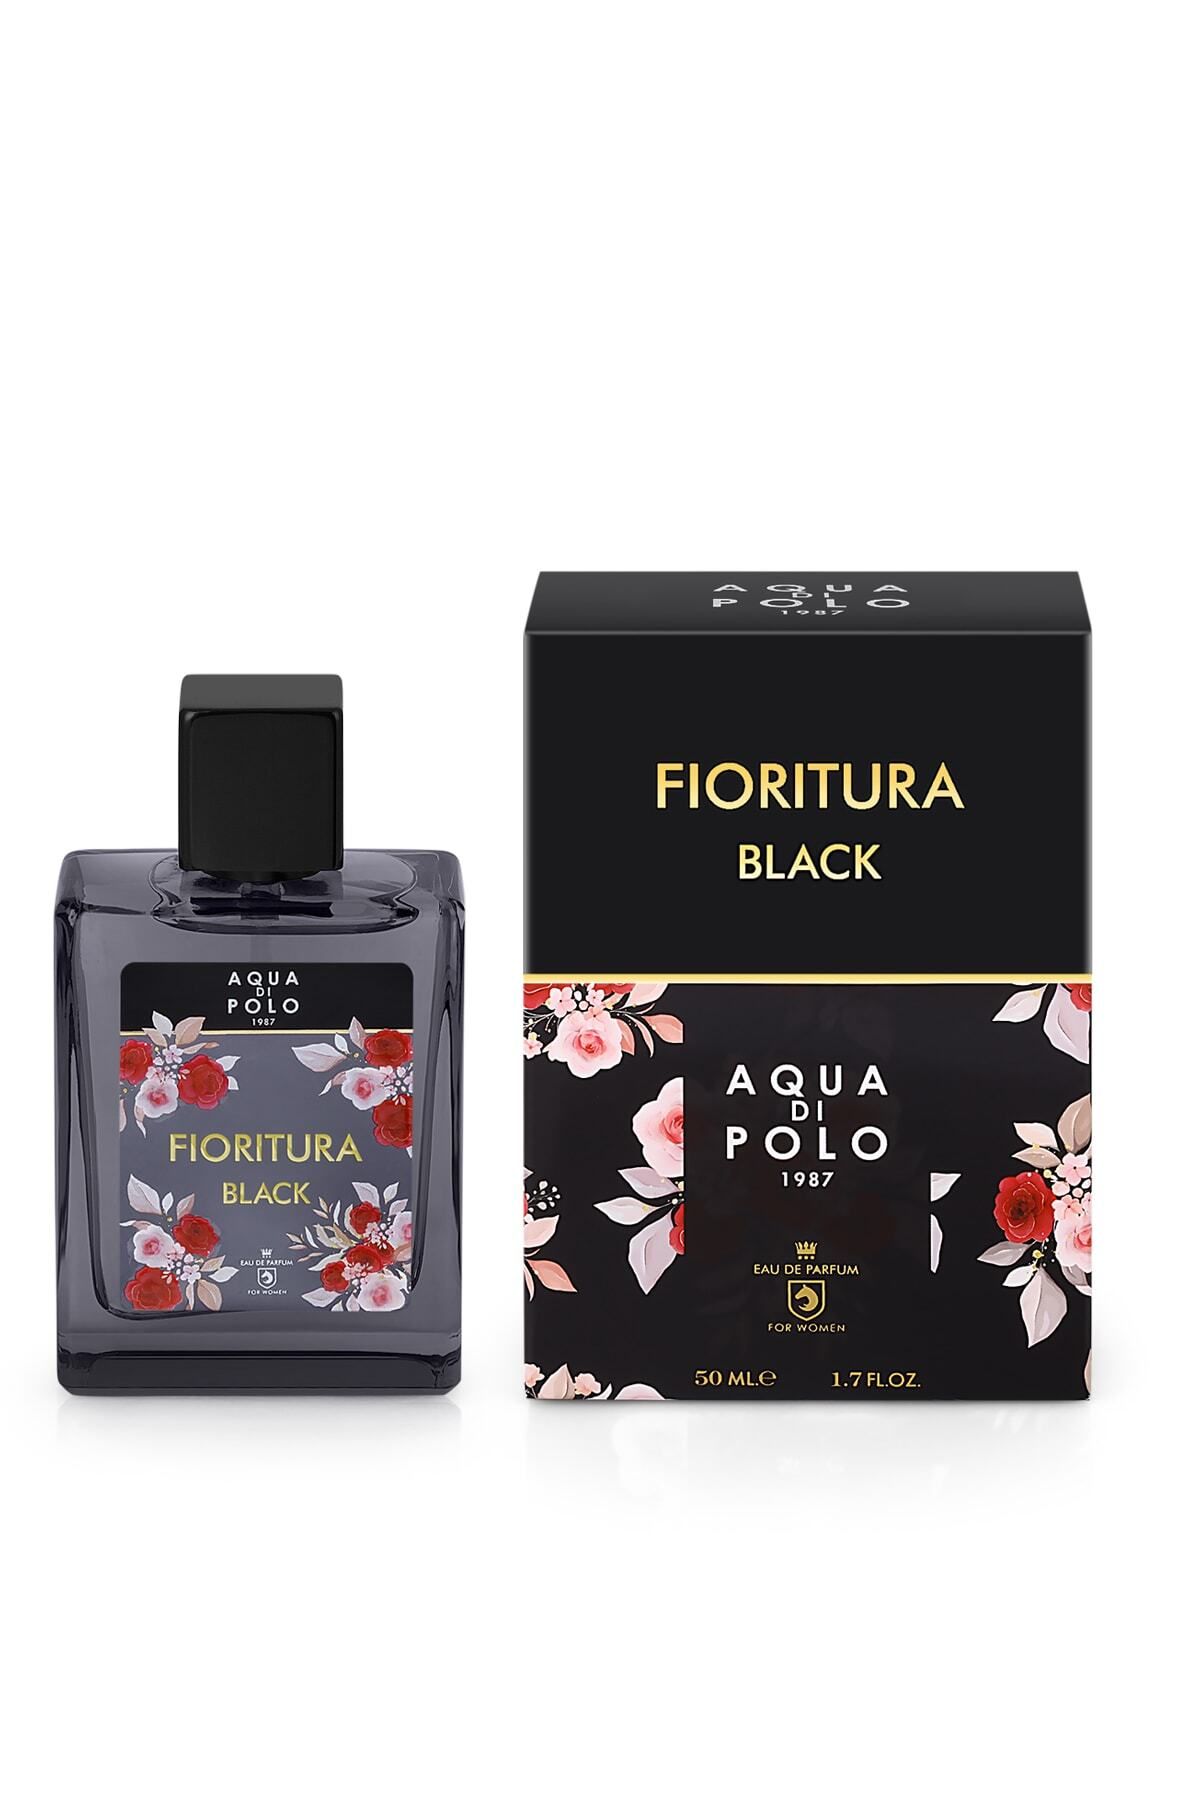 Aqua Di Polo 1987 Fioritura Black Edp 50 ml Kadın Parfüm Apcn003005